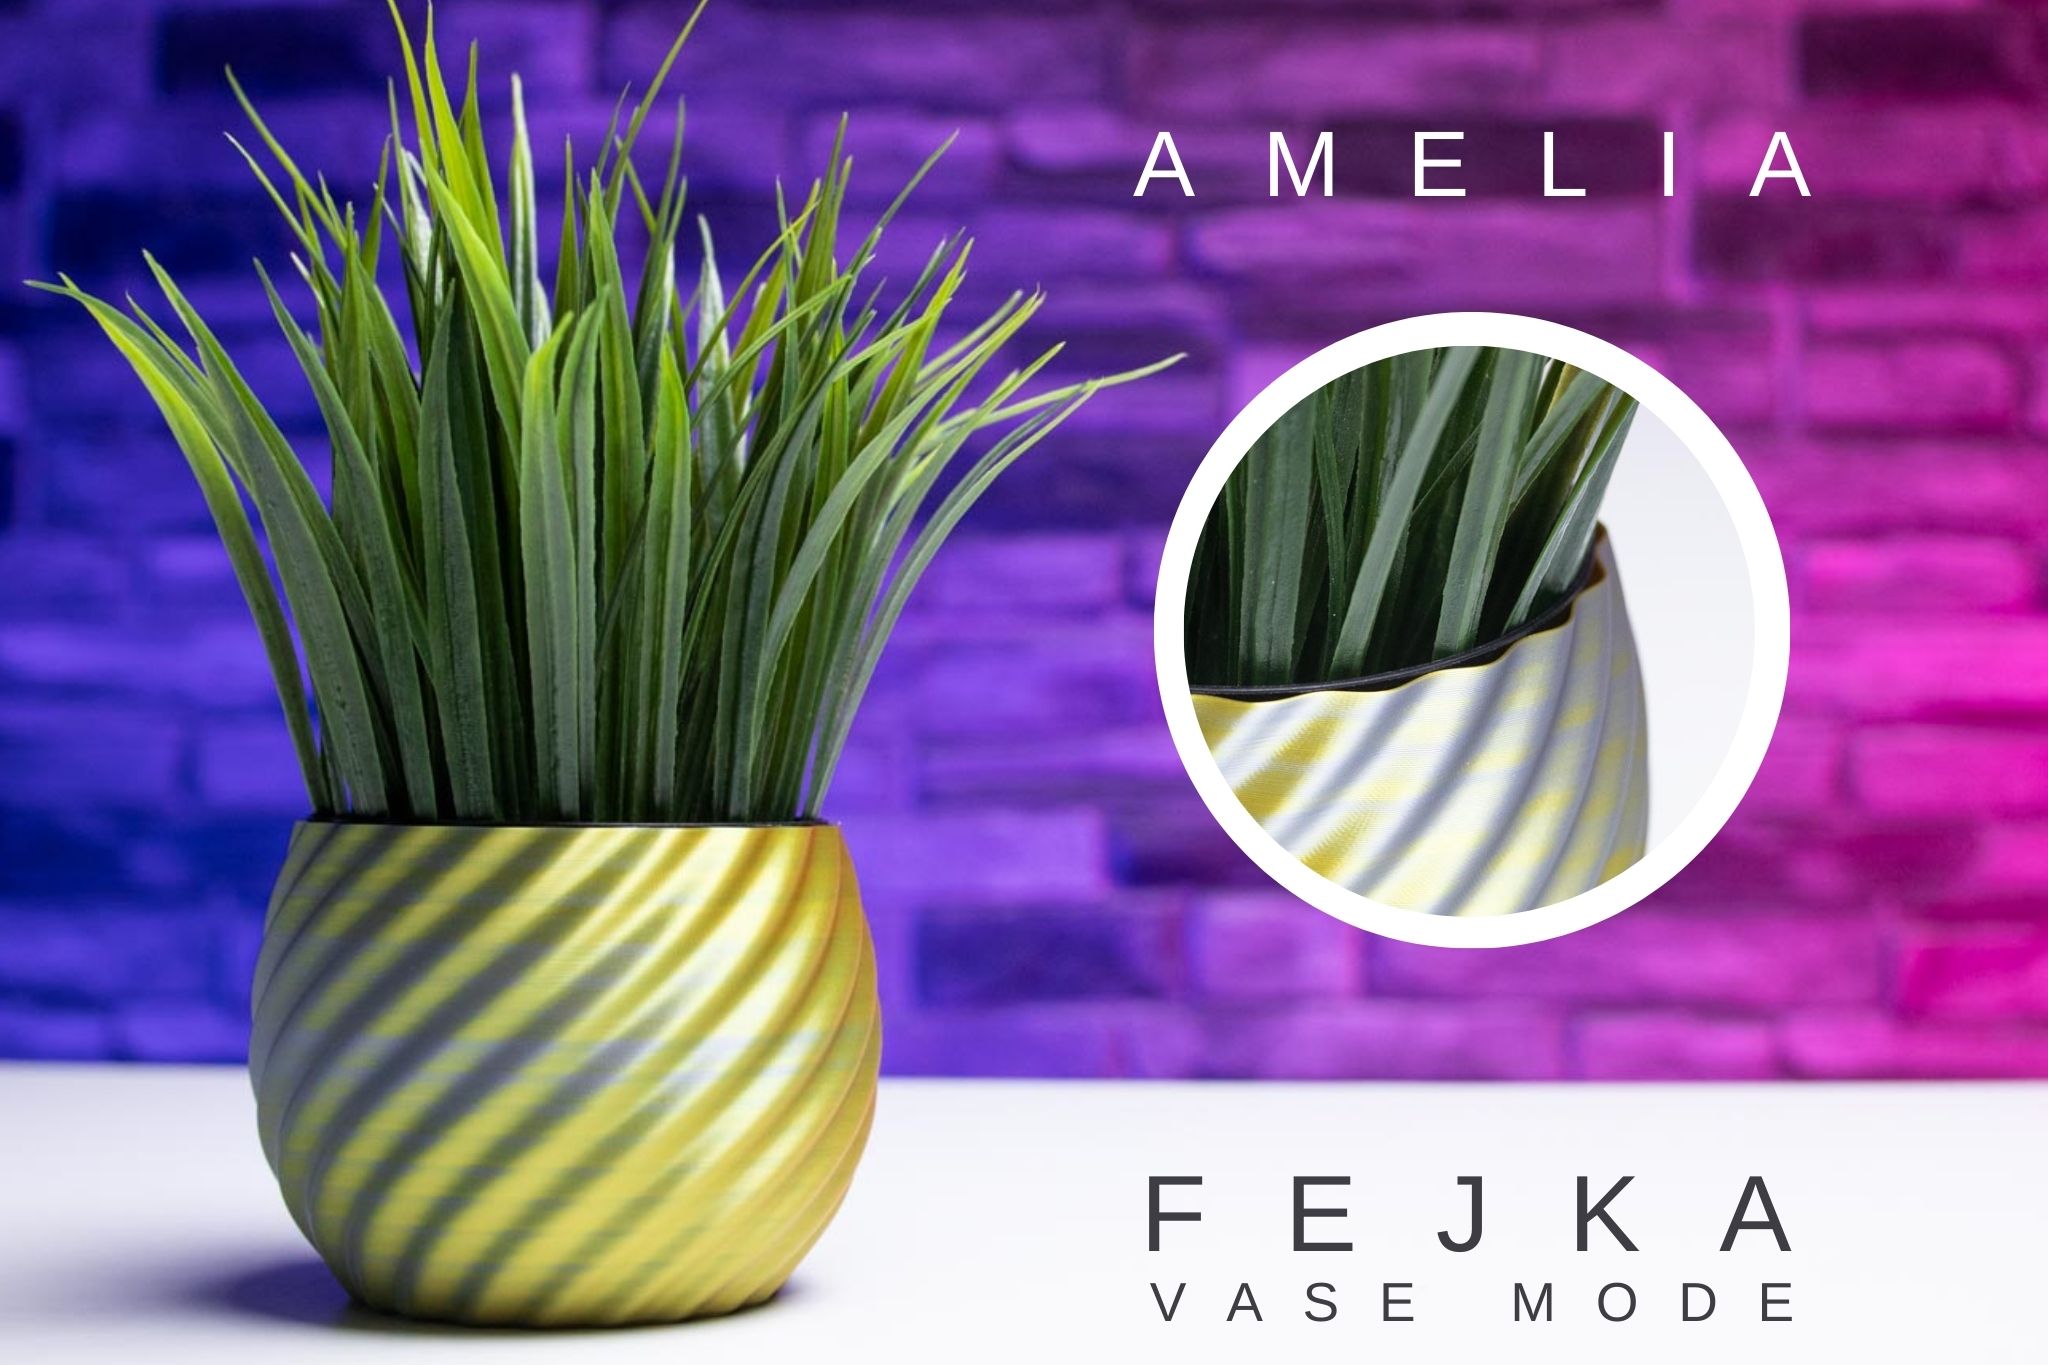 3D Printed Planter and Pot for Ikea Fejka - Vase AMELIA